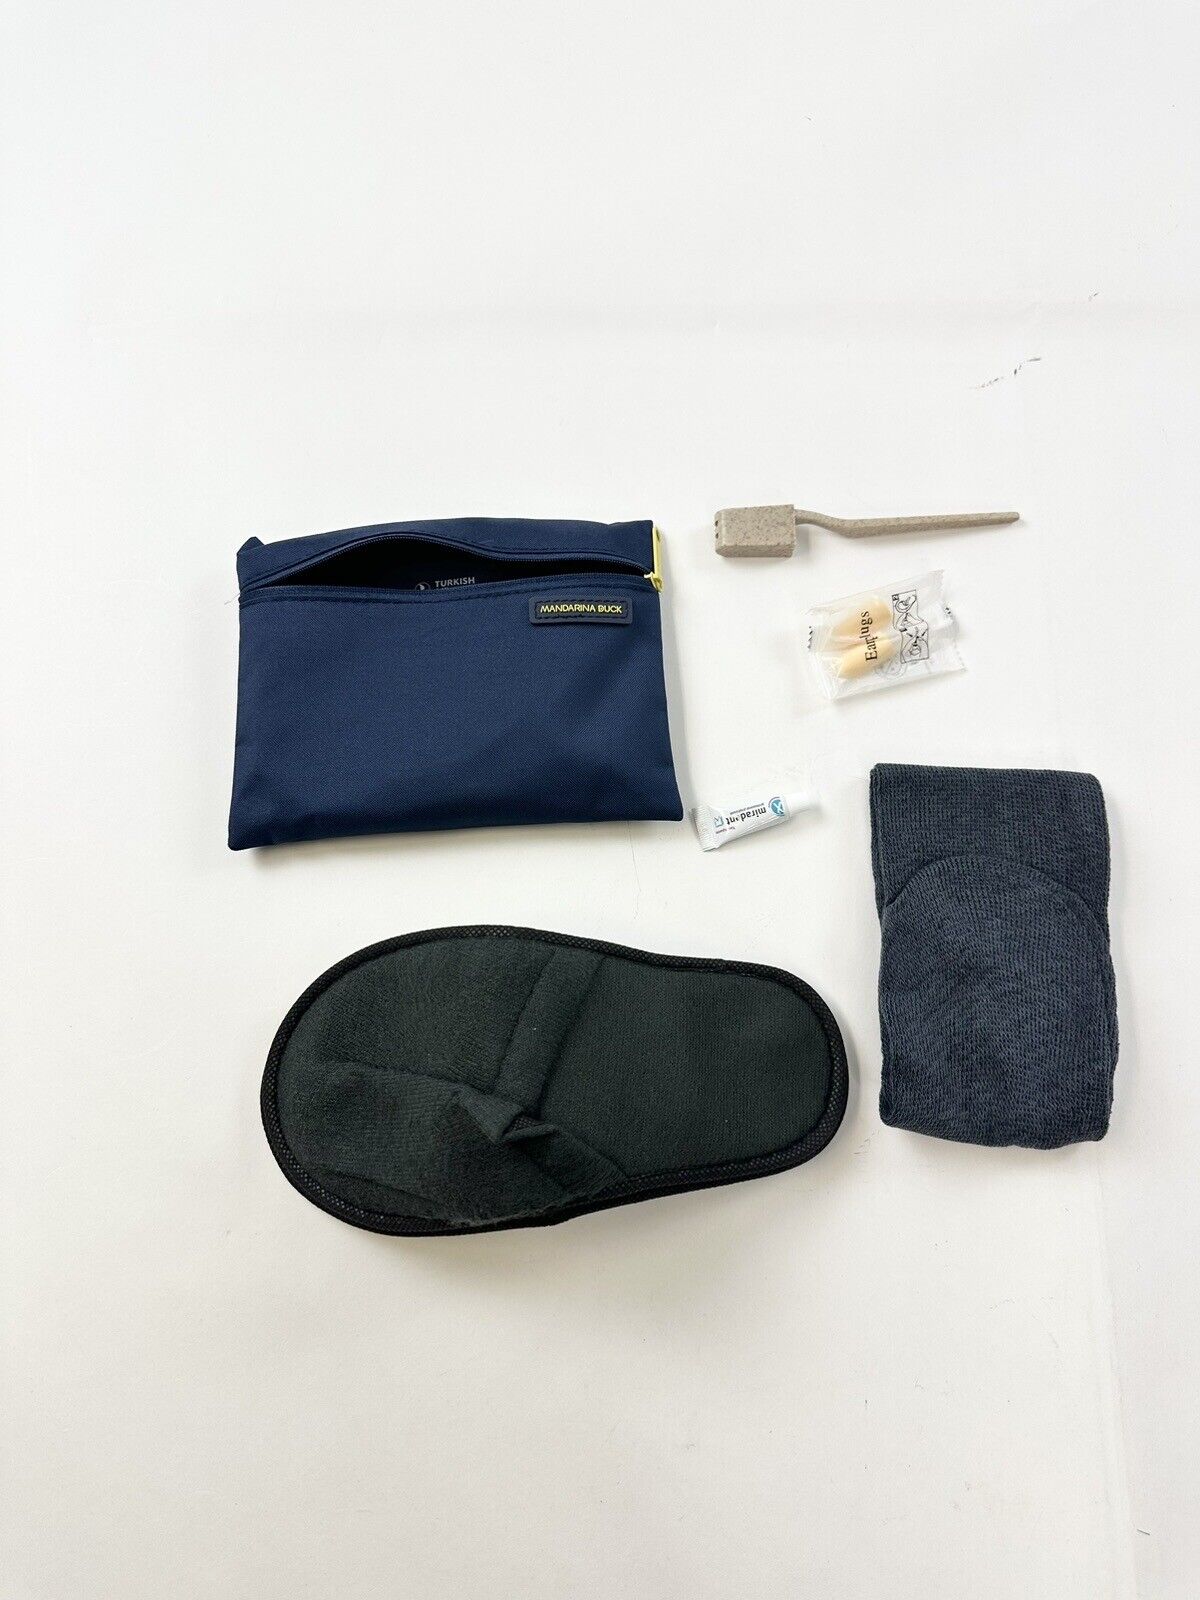 Turkish Airlines Business Class Amenity Kit Travel Bag Mandarina Duck Blue